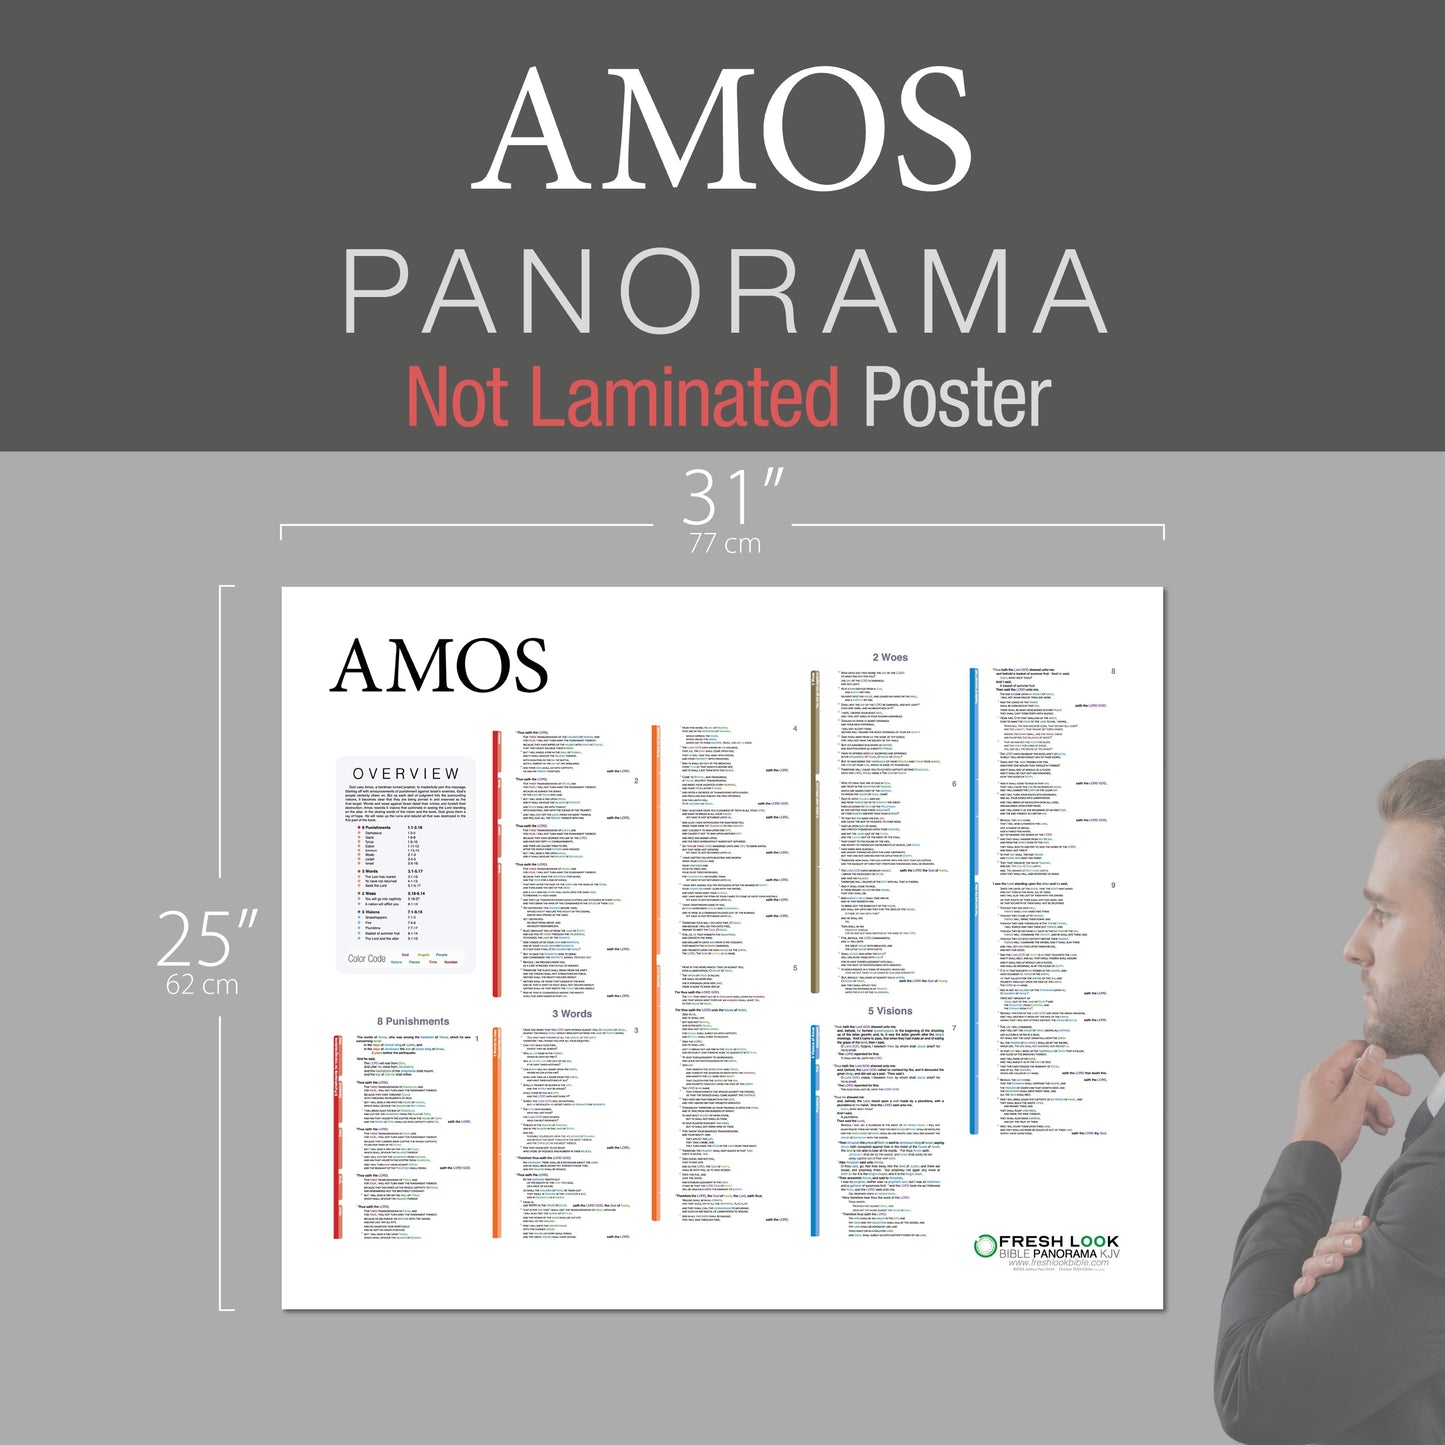 Amos Panorama Not Laminated